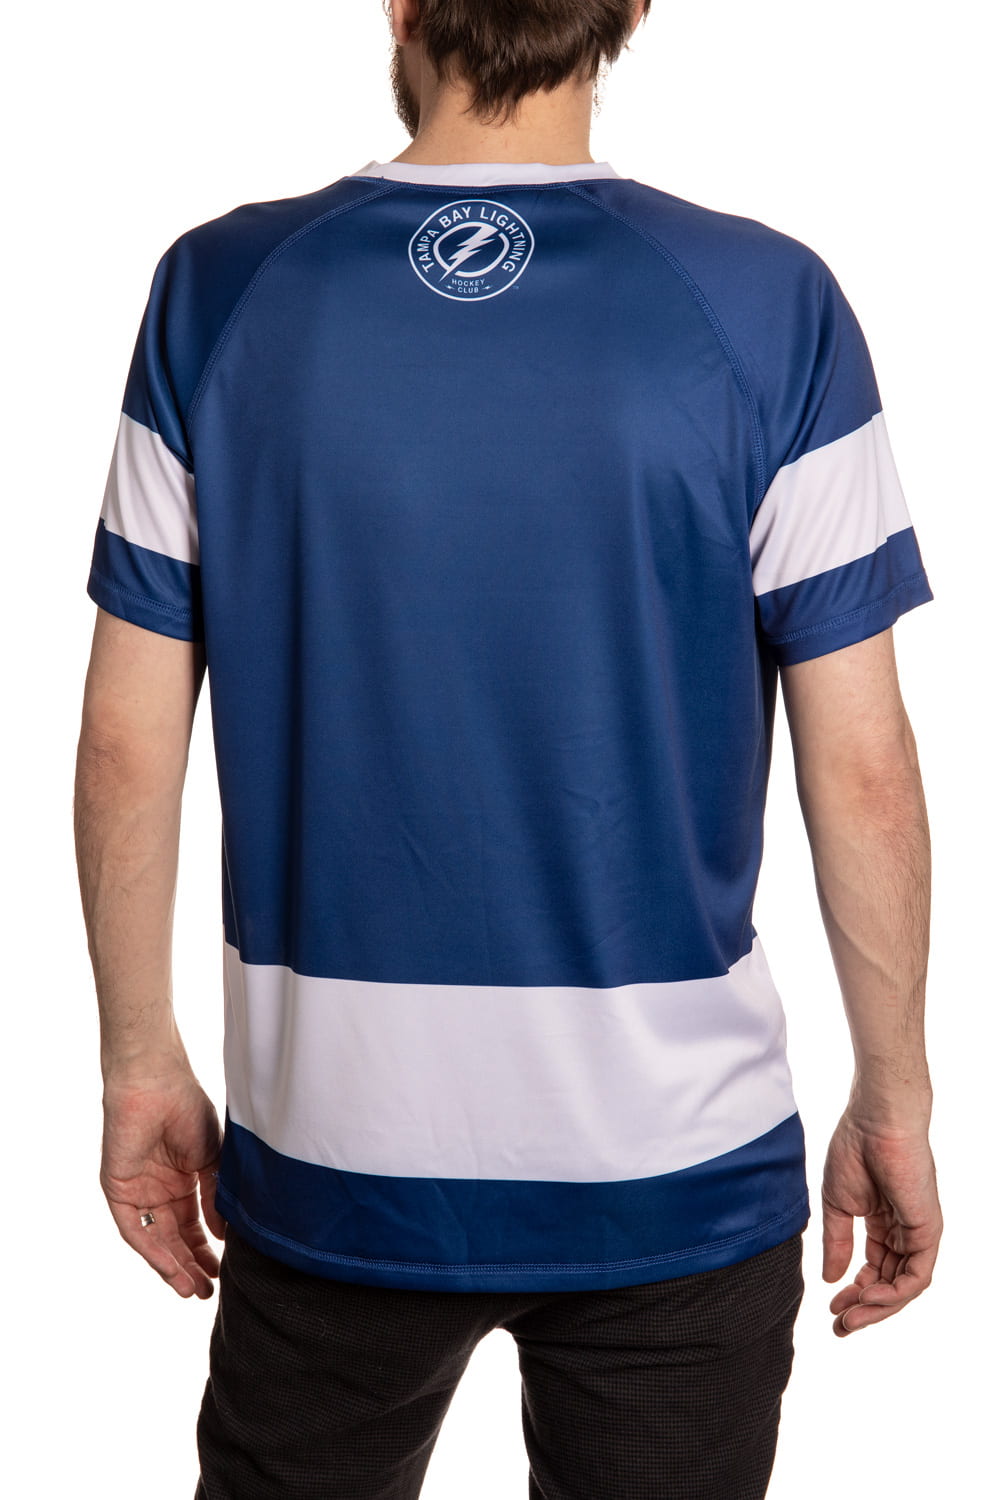 Tampa Bay Lightning Short Sleeve Rashguard Back View. Blue Shirt With Lightning Logo On Back Collar.